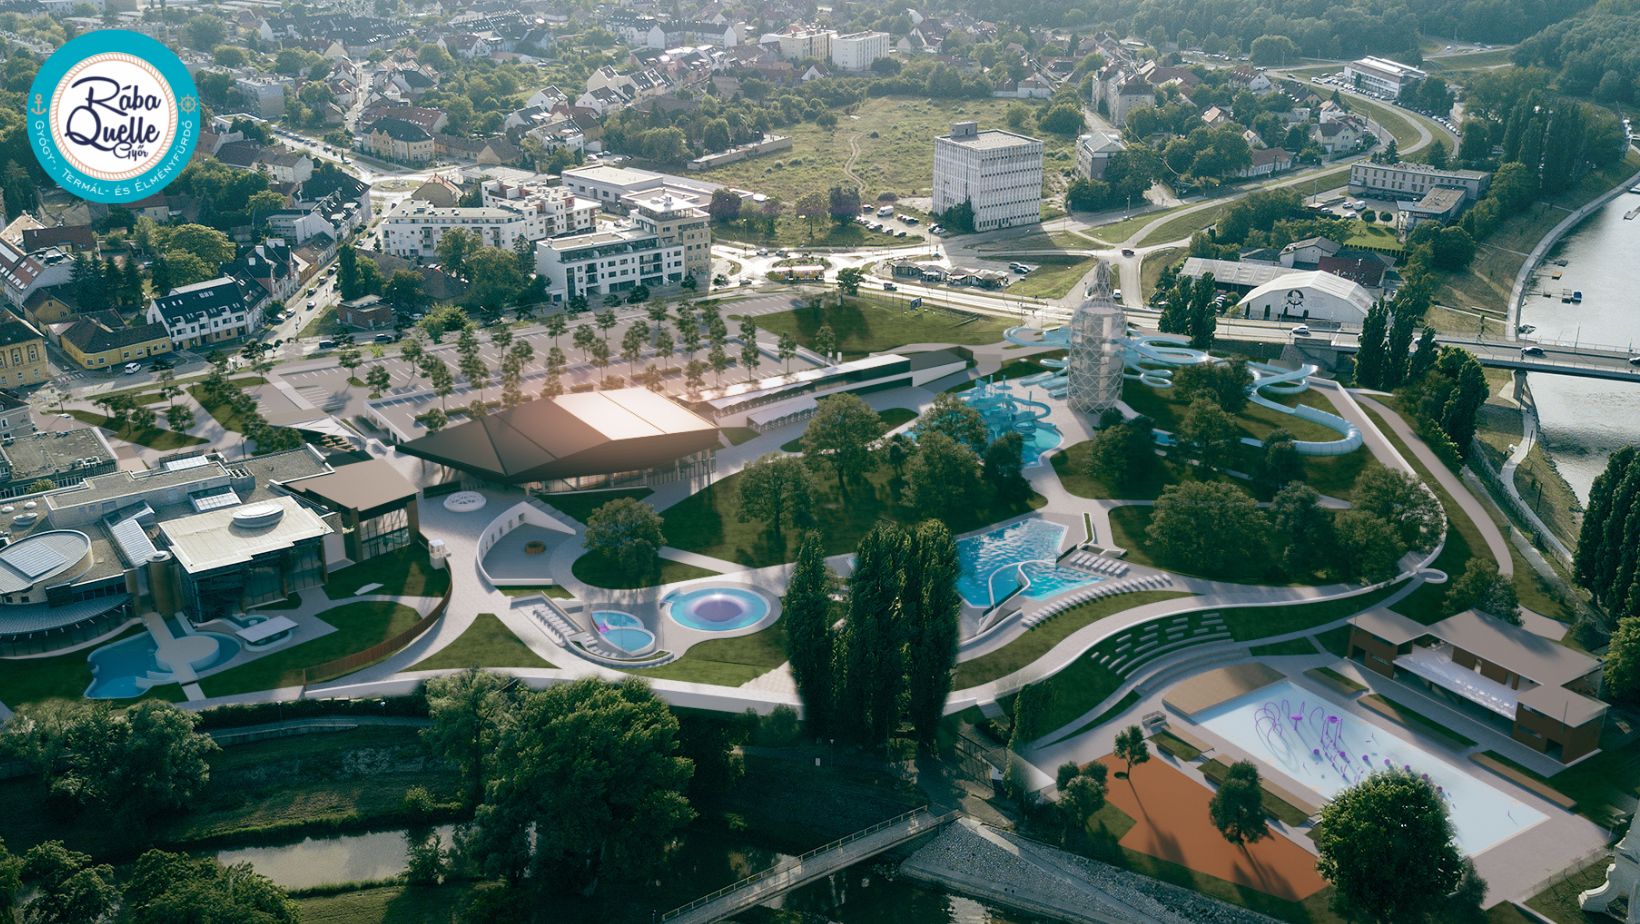 Győr water theme park